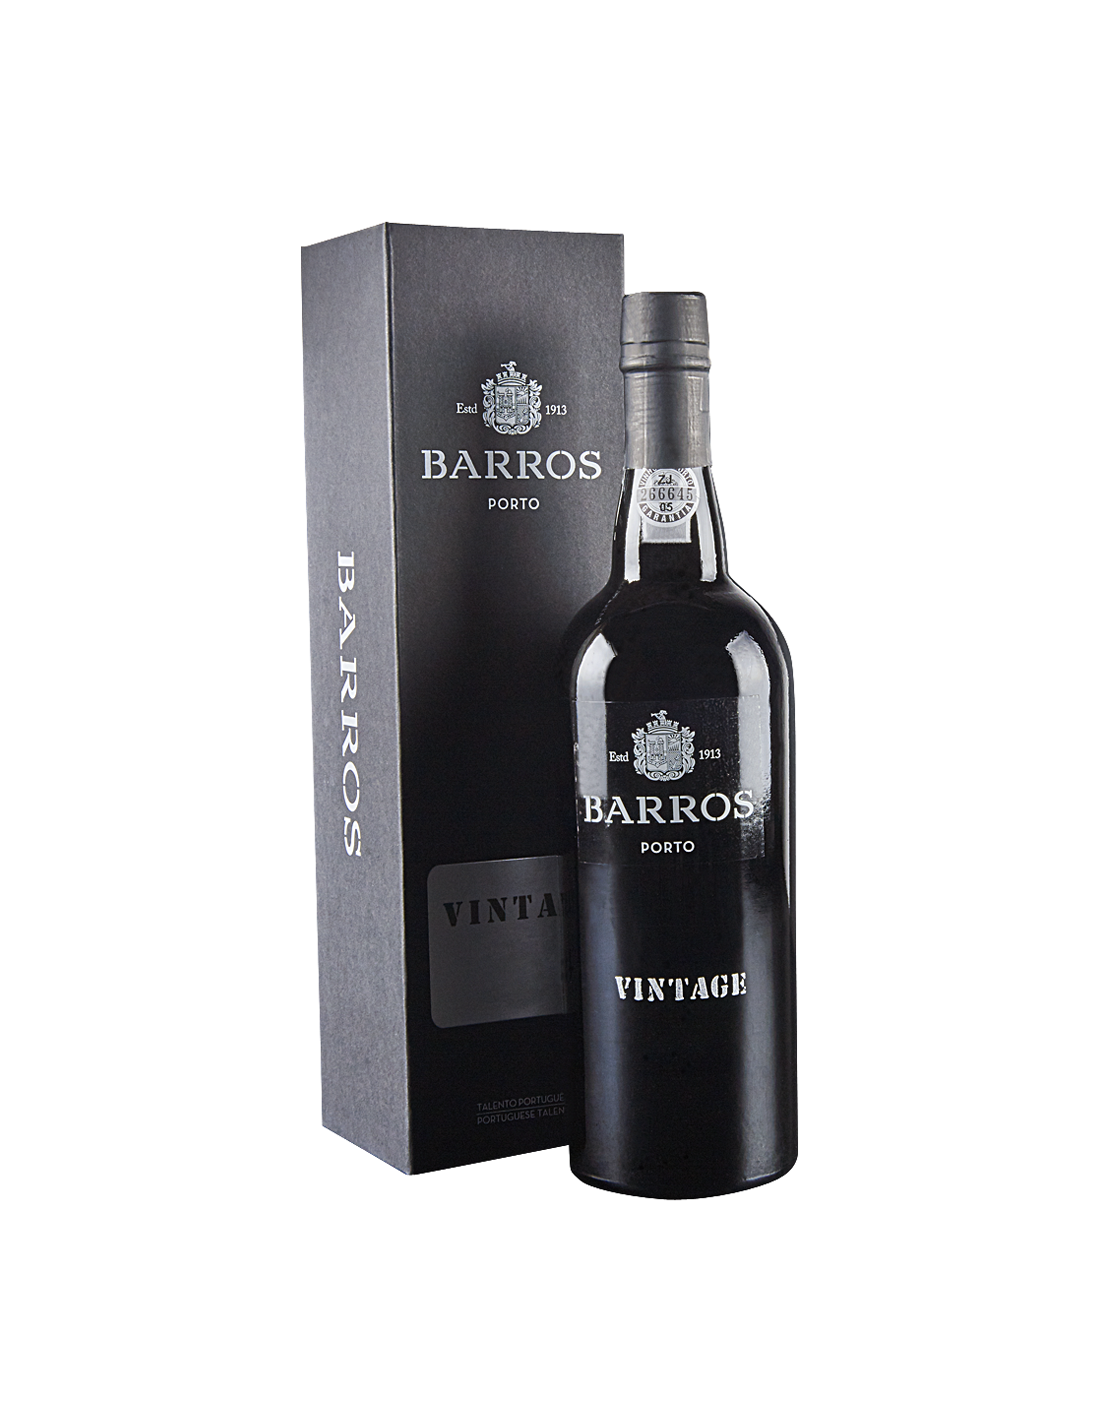 Vin porto rosu dulce, Cupaj, Barros Vintage, 1985, 0.75L, 20% alc., Portugalia alcooldiscount.ro